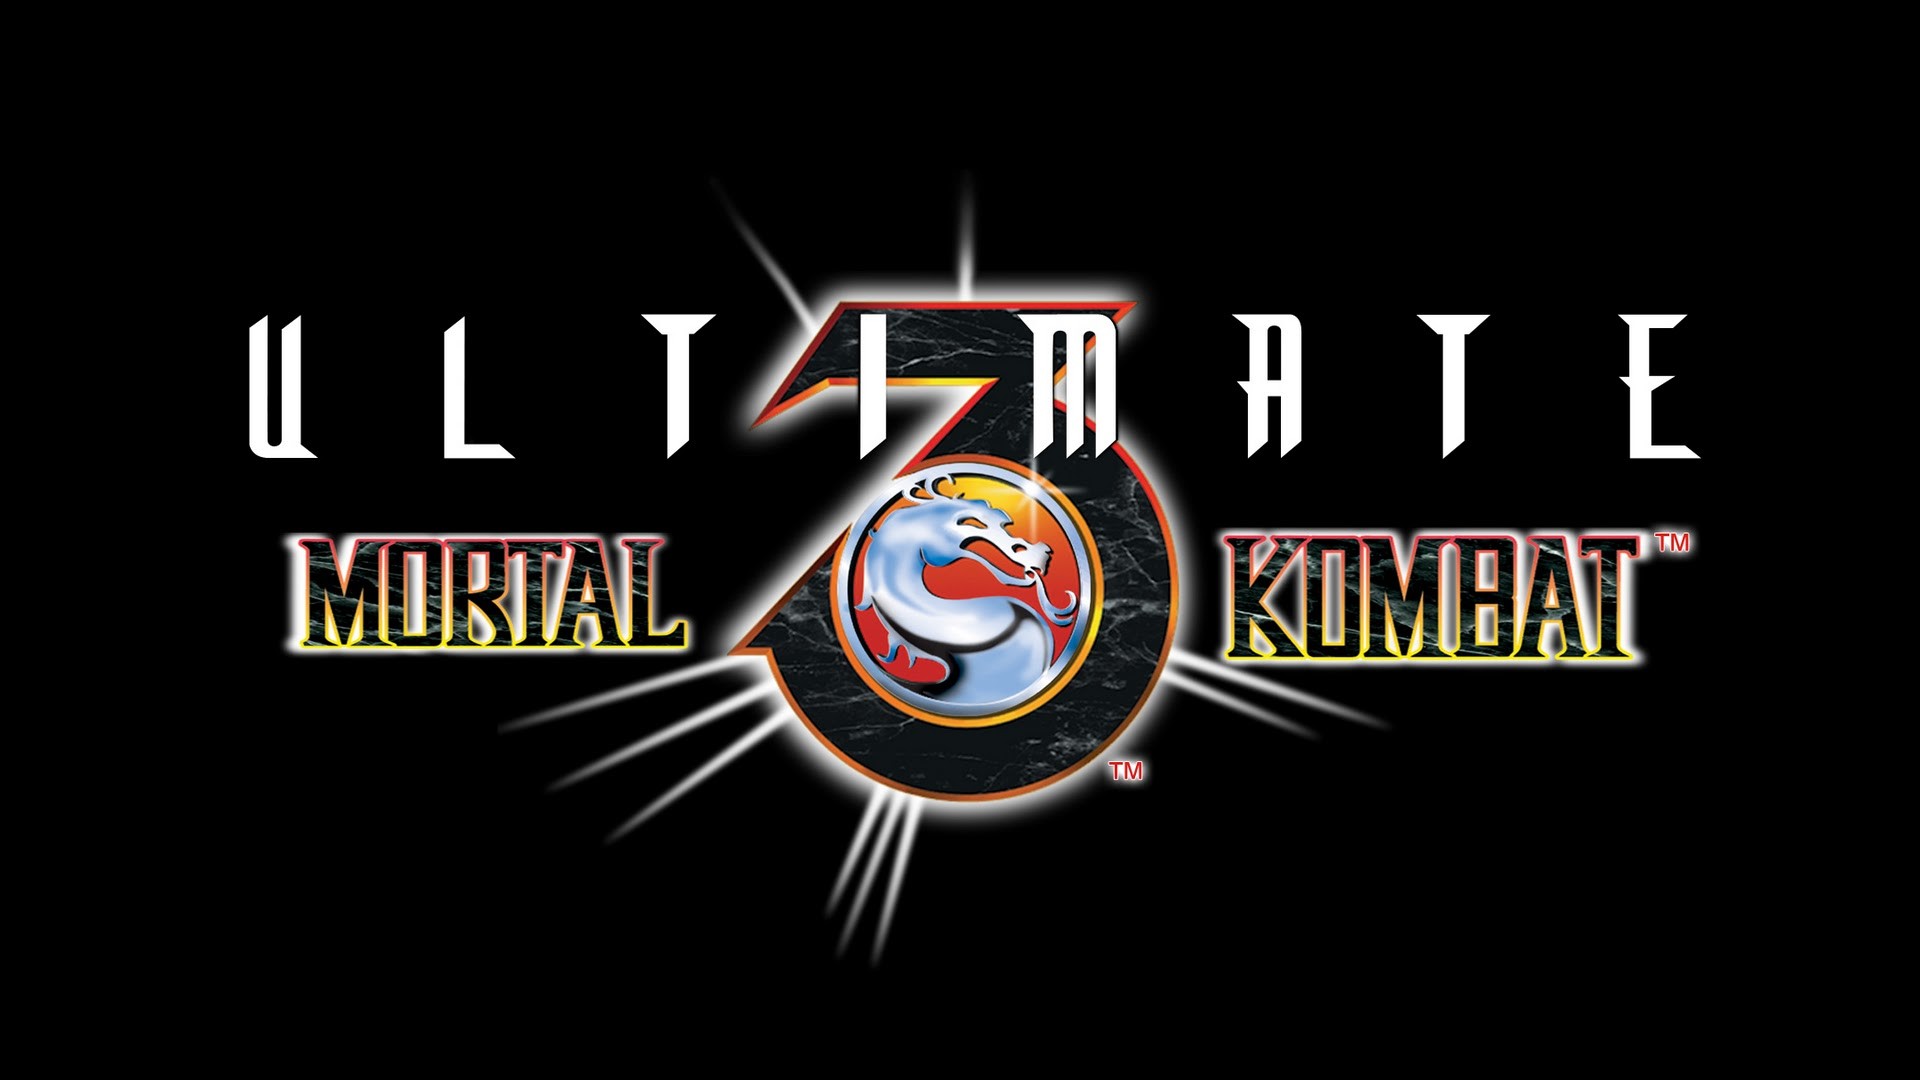 download mortal kombat legends 3